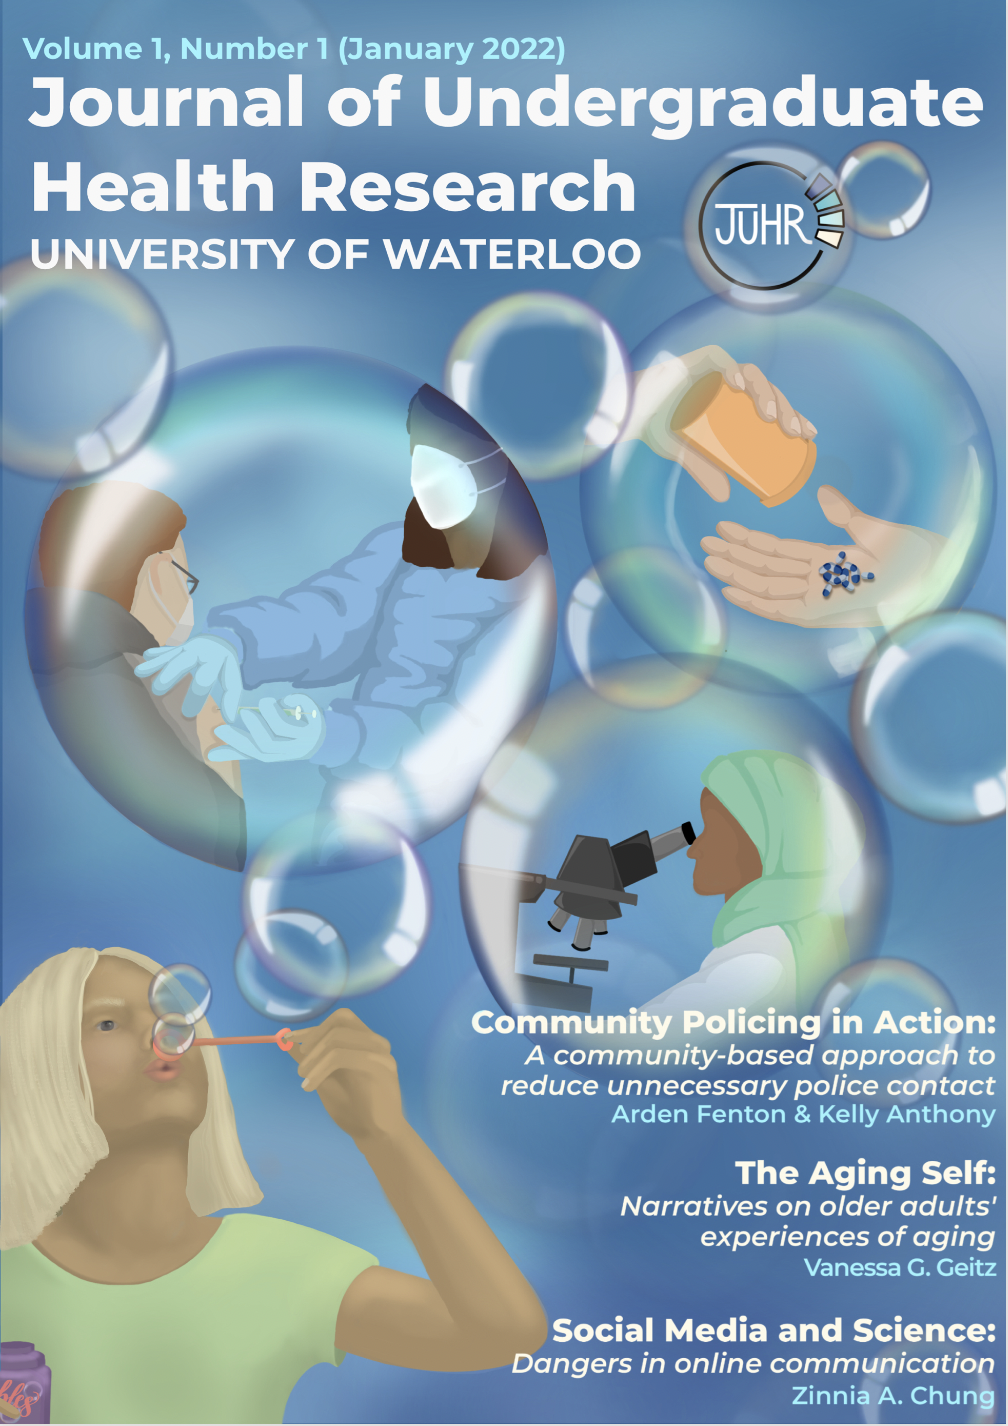 					View Vol. 1 No. 1.January (2022): University of Waterloo Journal of Undergraduate Health Research (JUHR)
				